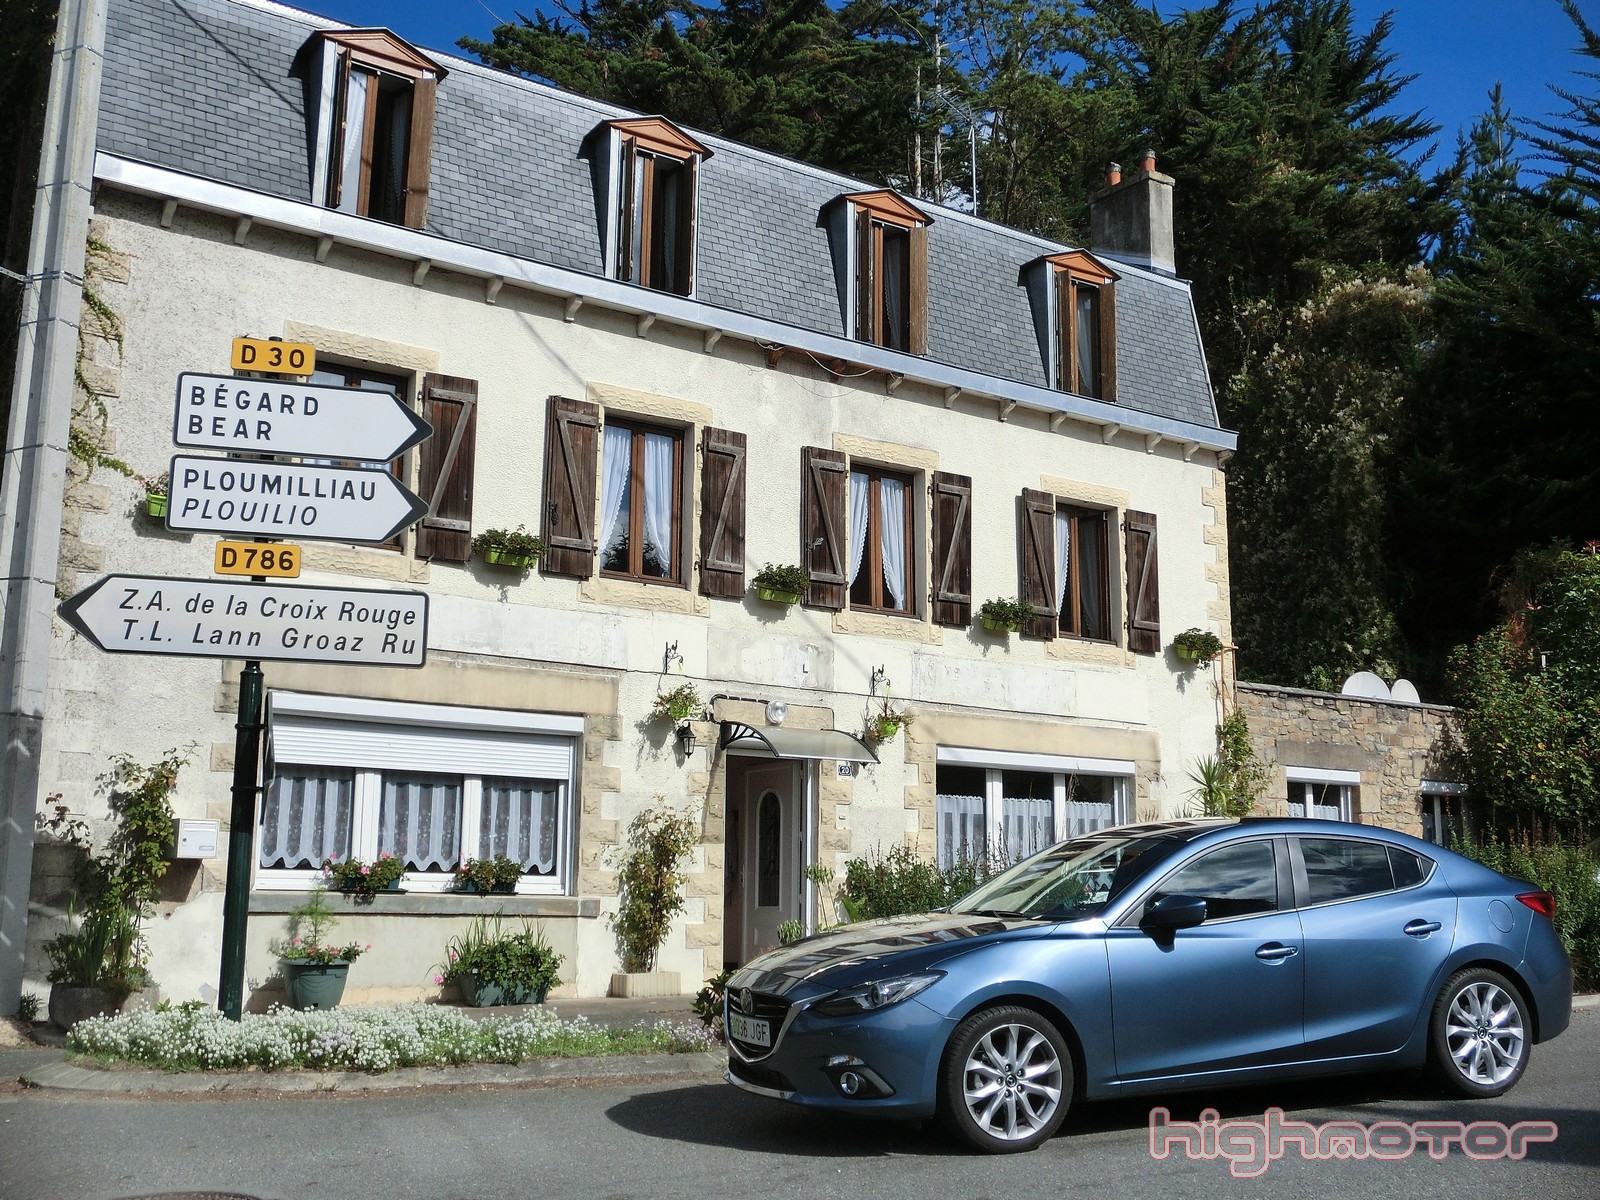 Prueba Mazda3 Sportsedan en ruta: De Brest a Caen